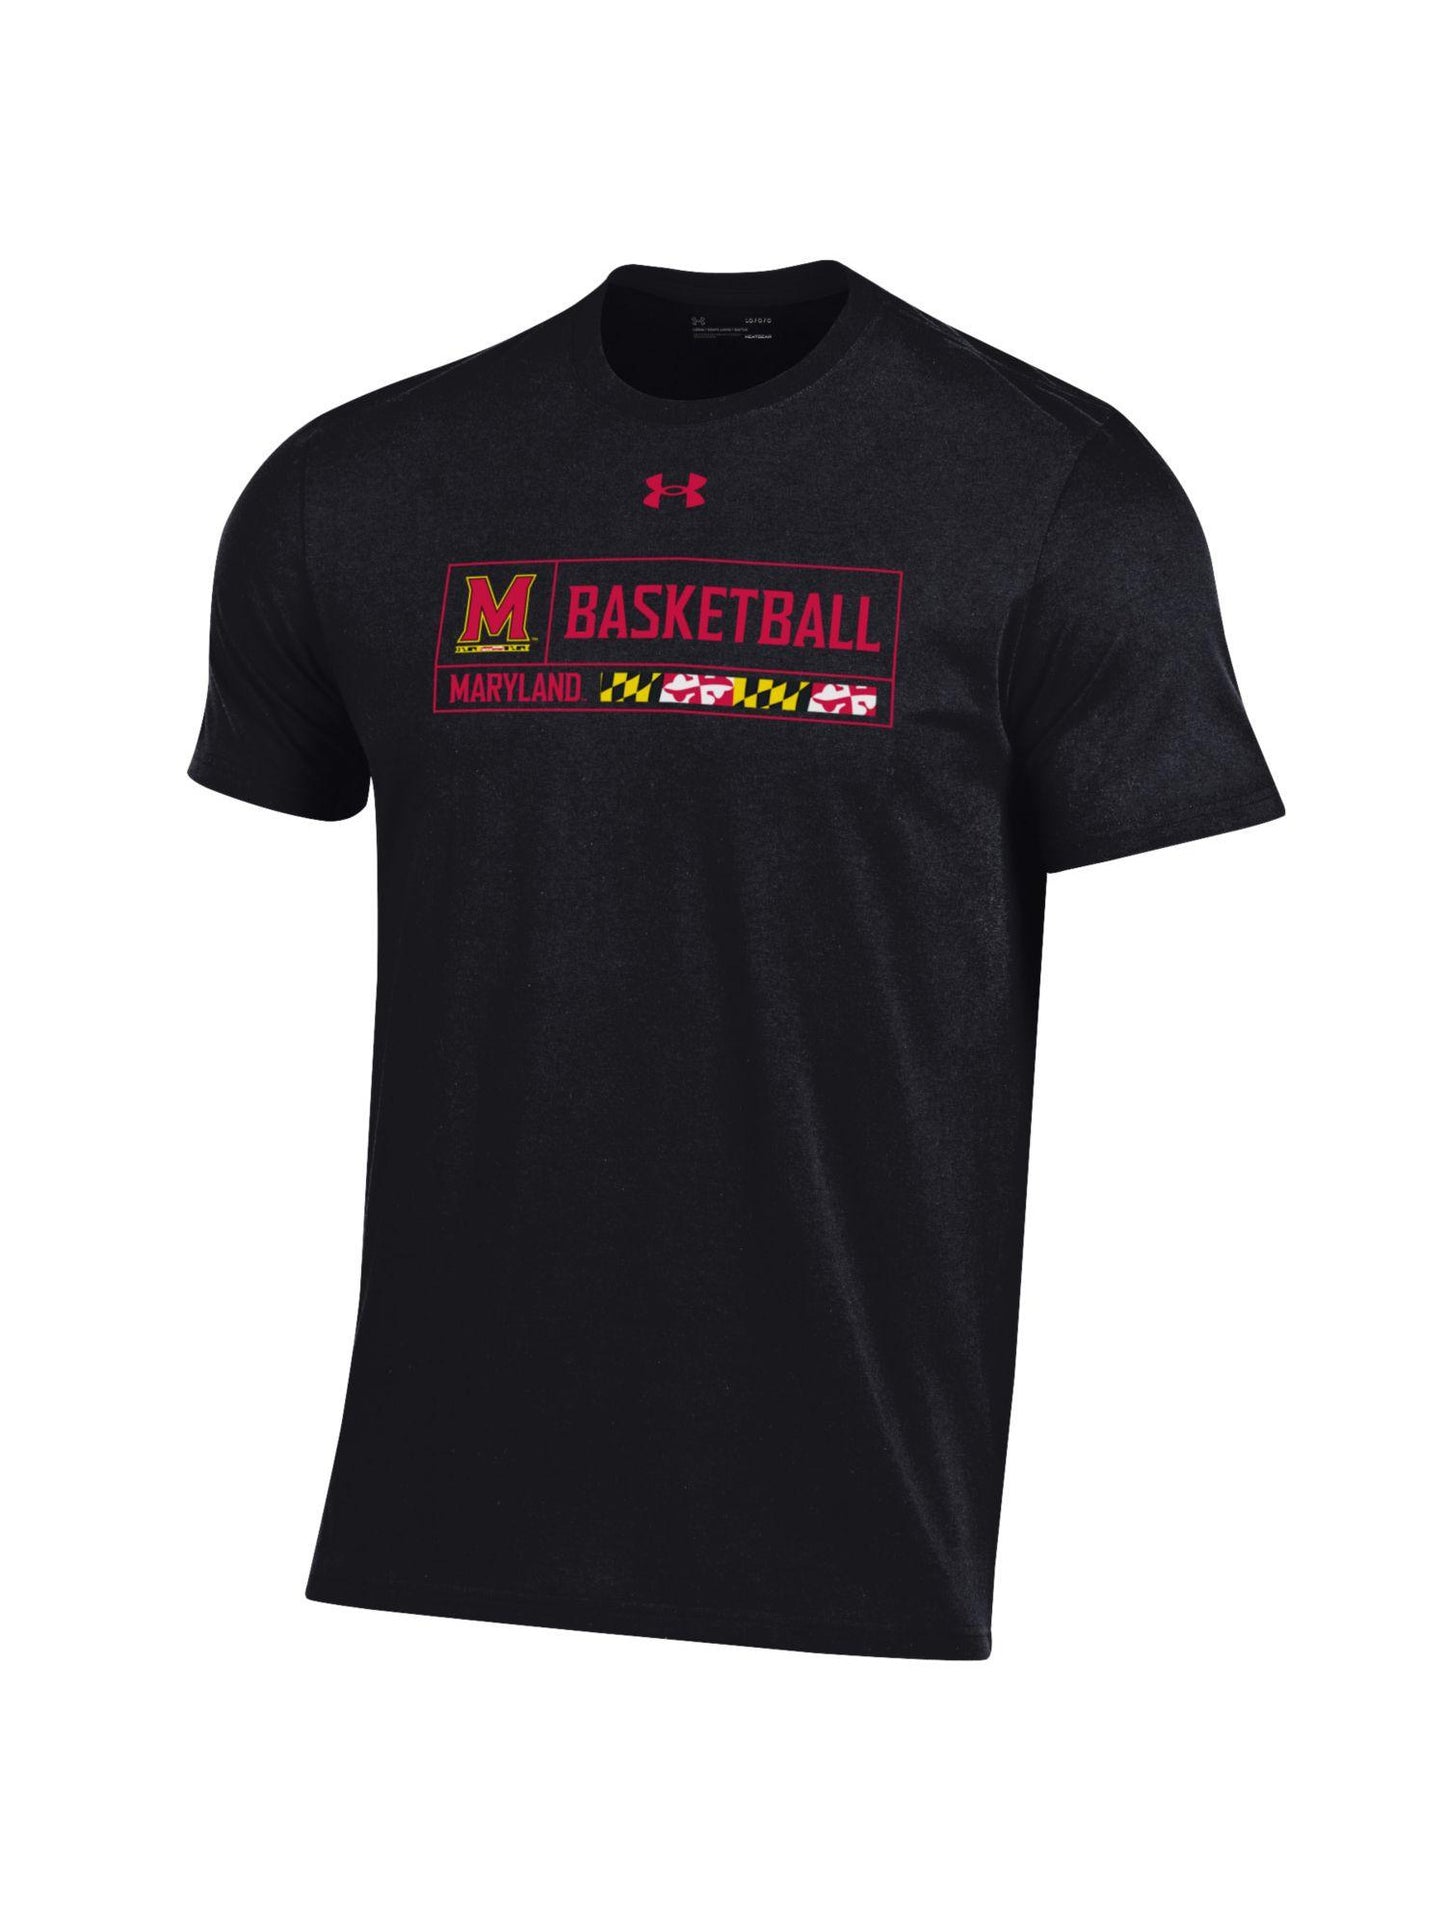 Under Armour University of Maryland Basketball T-Shirt